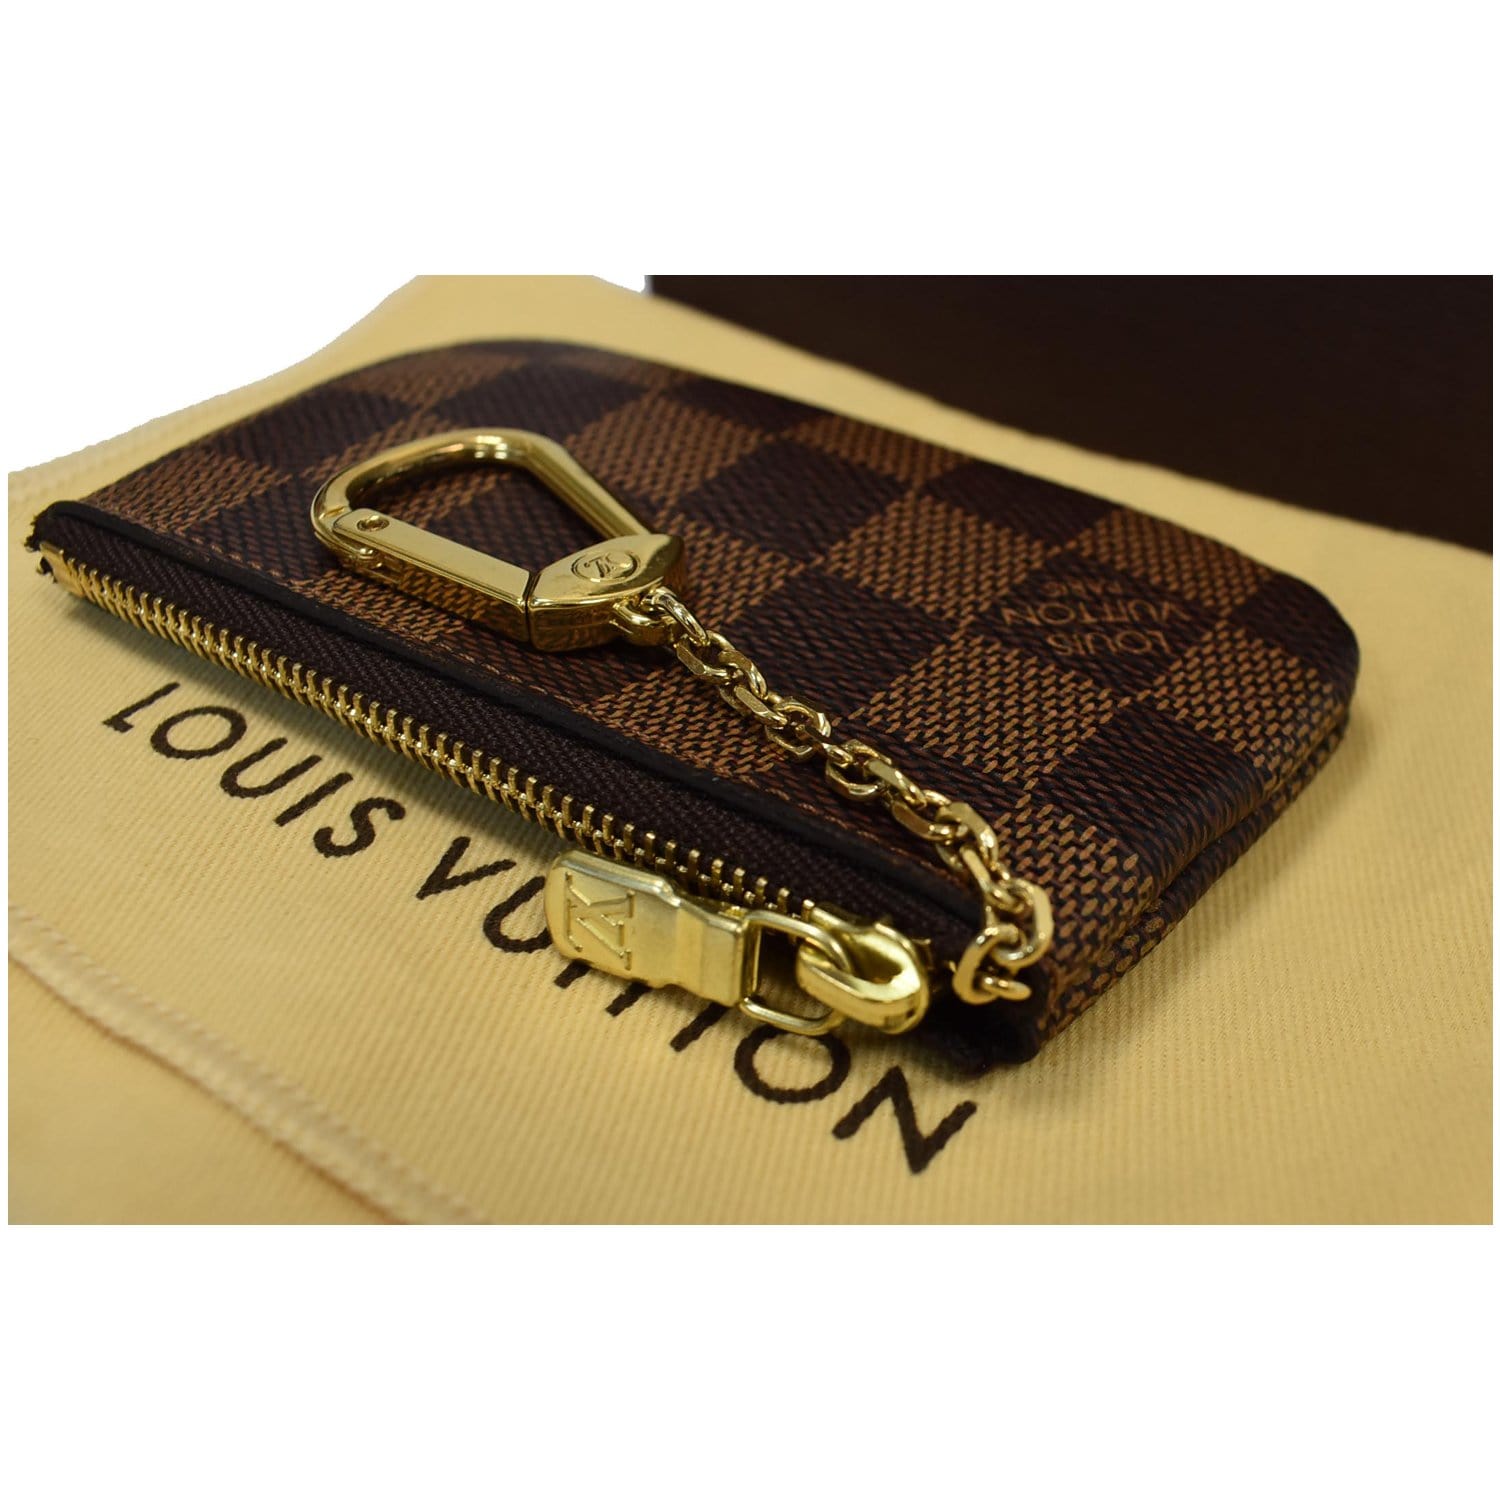 Louis Vuitton Key Pouch Damier Ebene Coin Pouch Wristlet